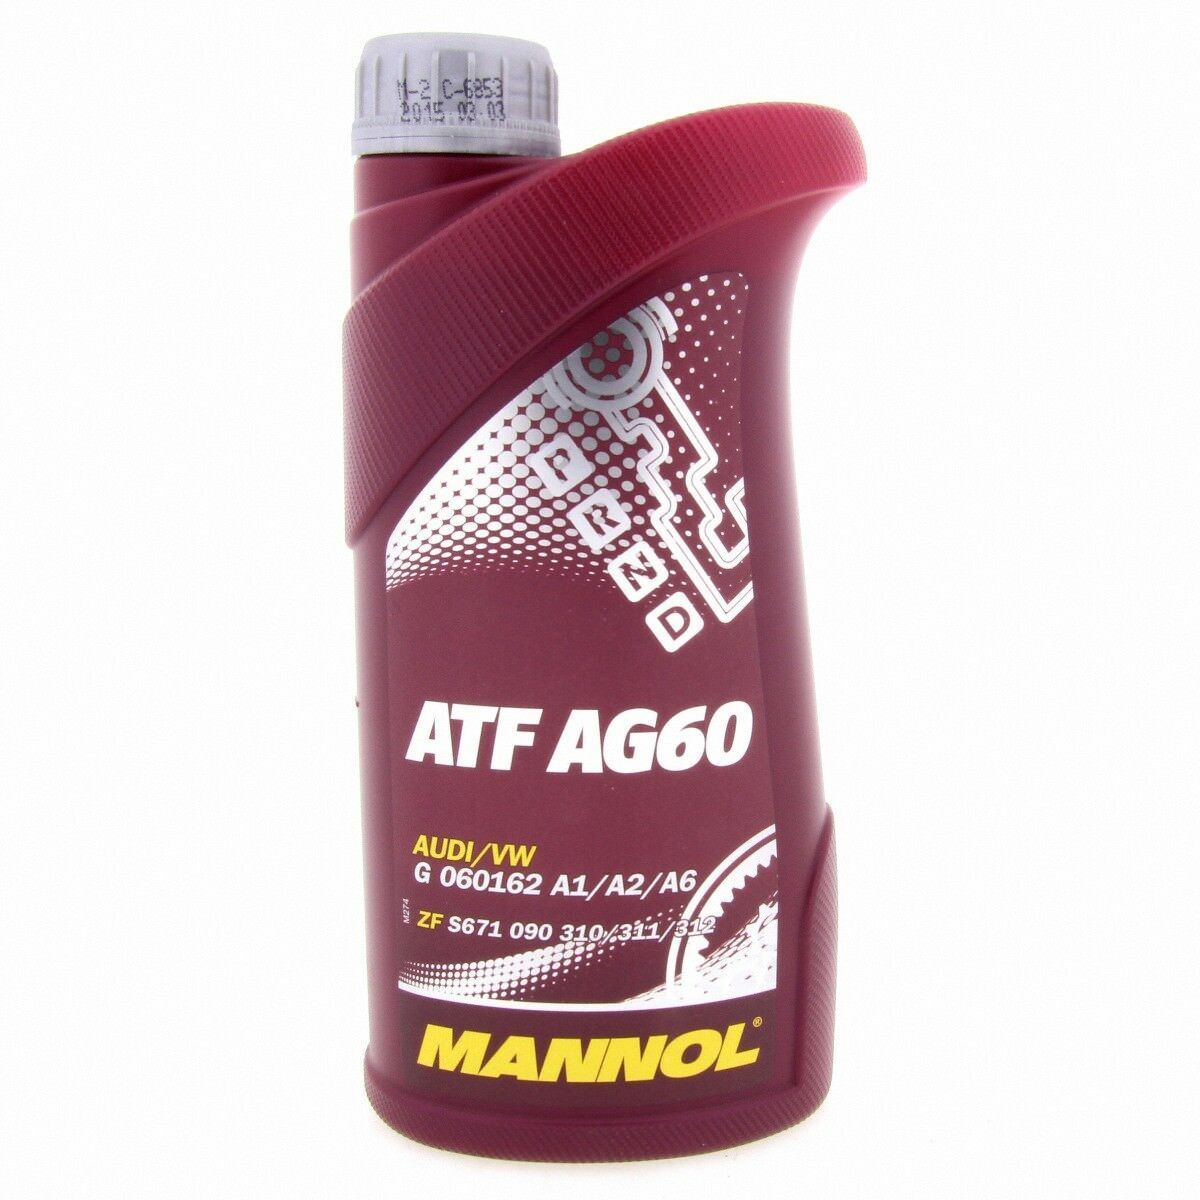 10 Liter (10x1) MANNOL ATF AG60 Getriebeöl Automatikgetriebe Öl 4036021103044